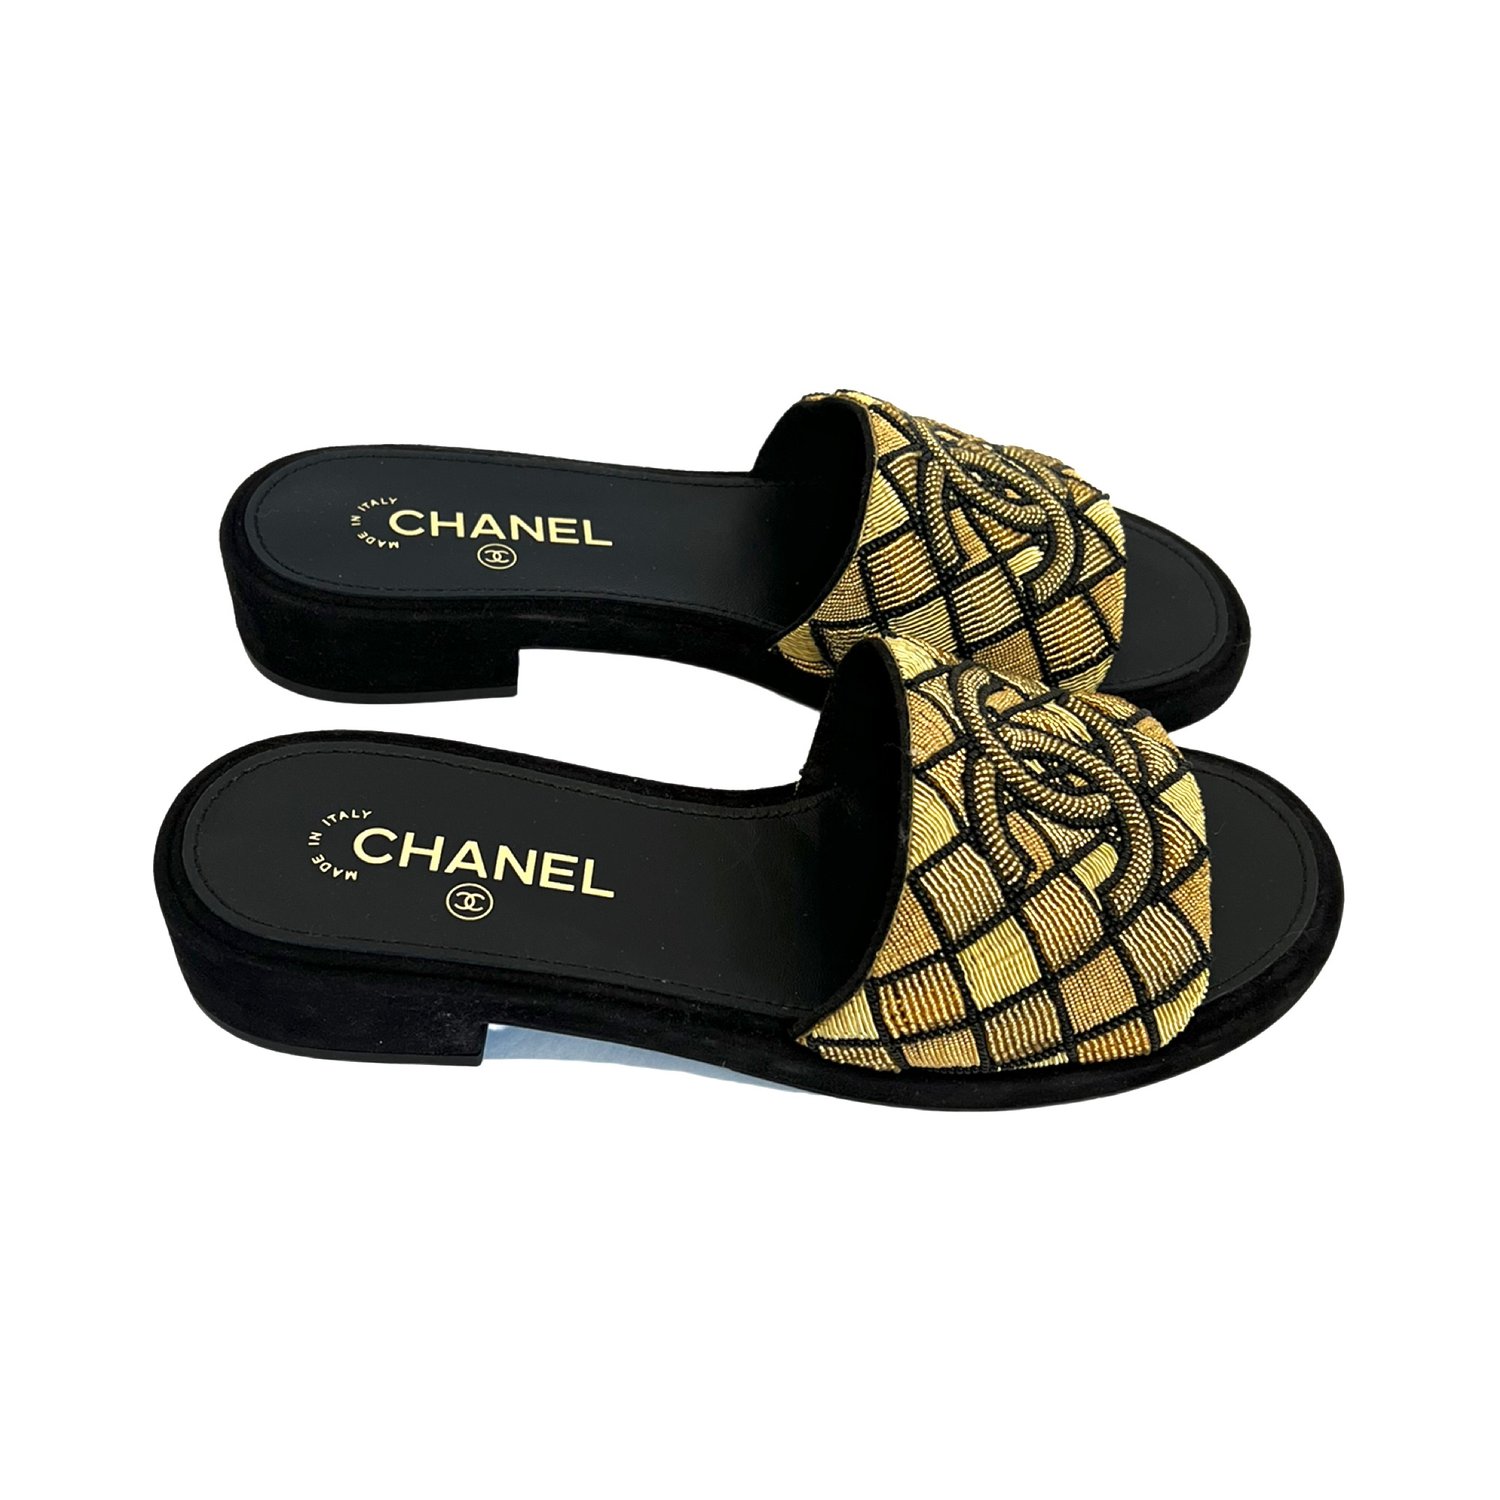 Chanel sandal cc logo - Gem